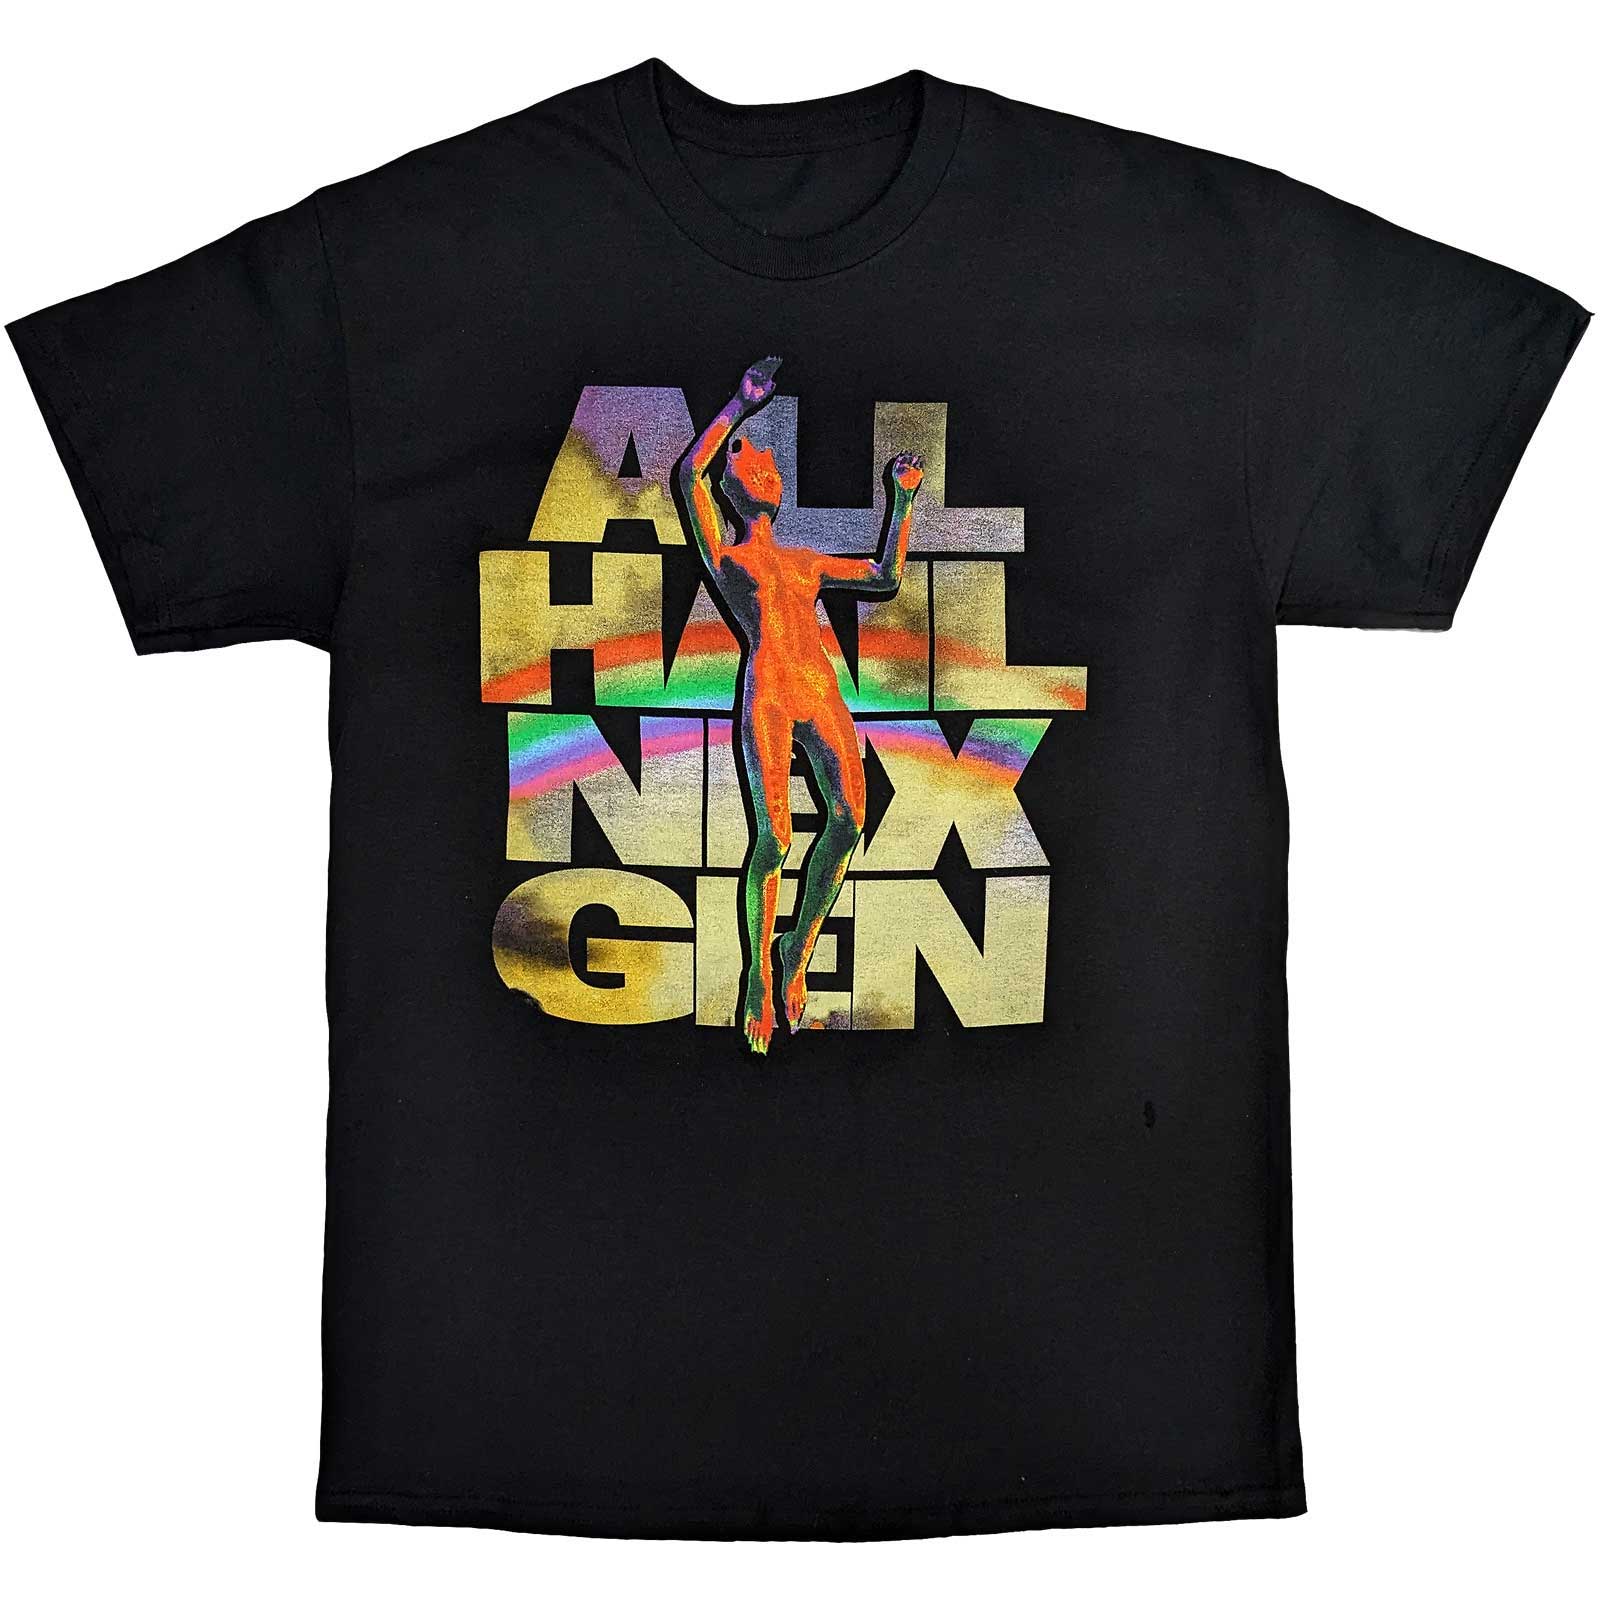 Bring Me The Horizon T-Shirt - All Hail (Back Print) - Official Licensed Design